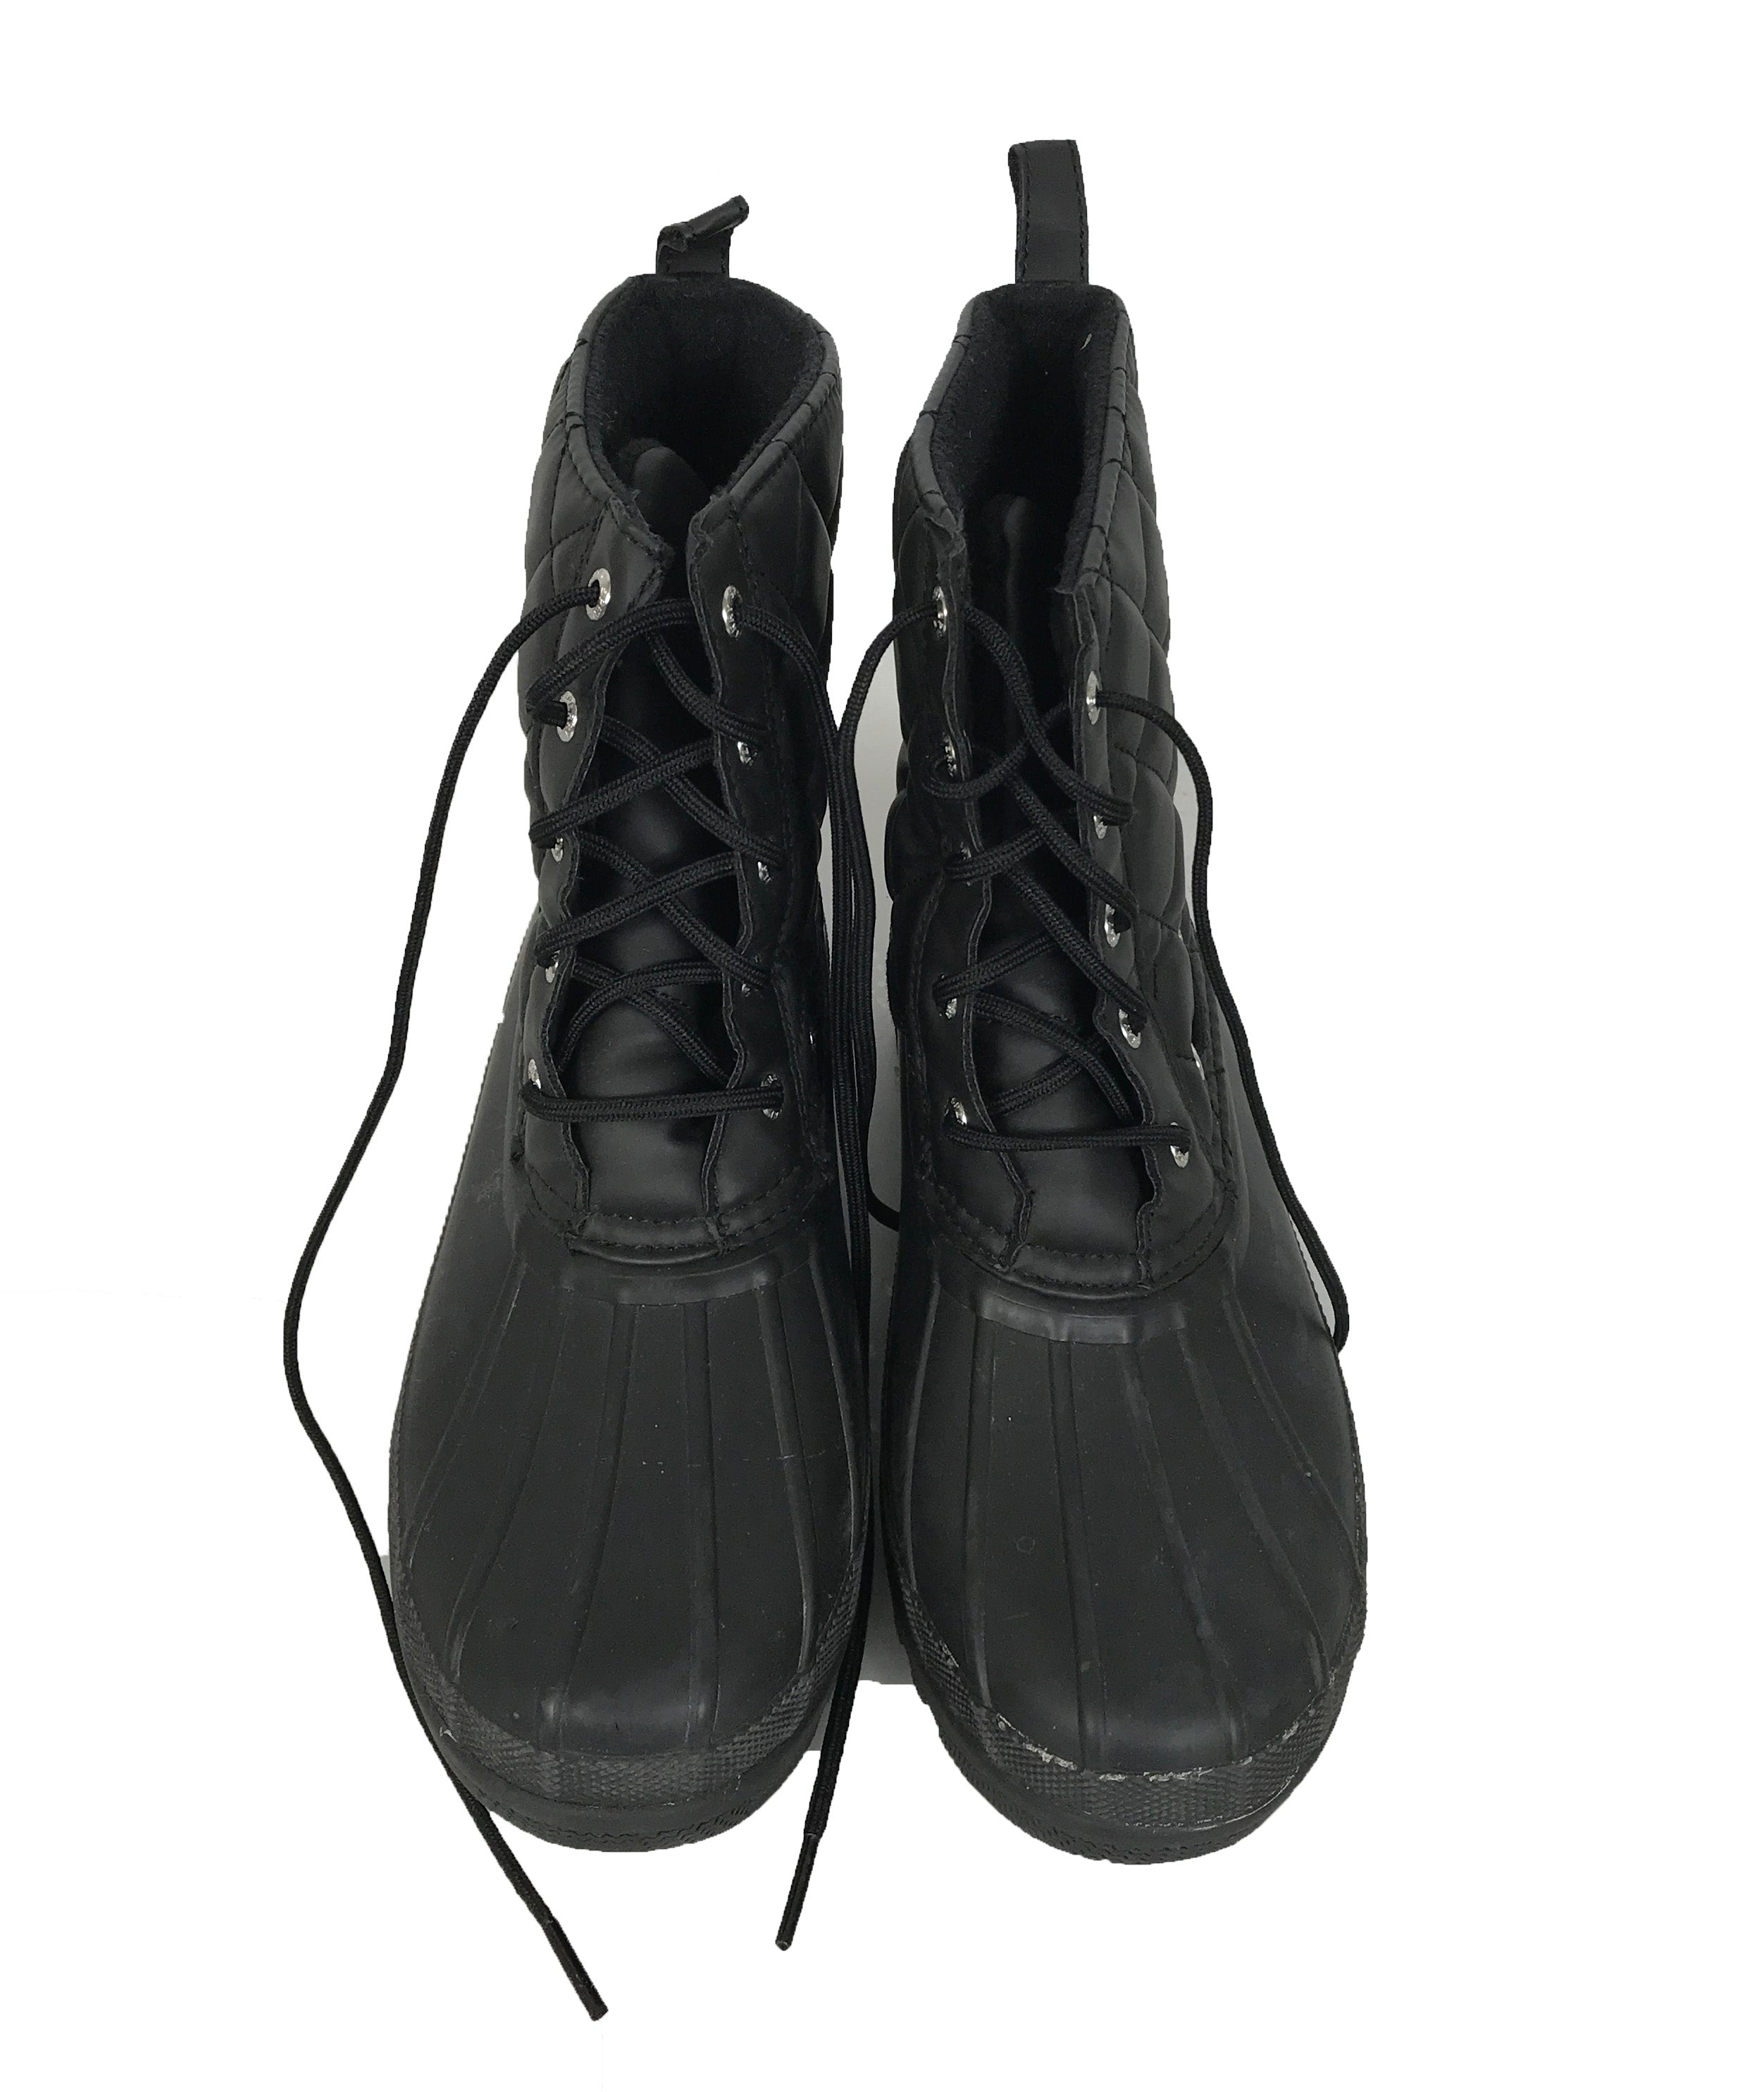 Sperry's Black Winter Boots Women's Size 7